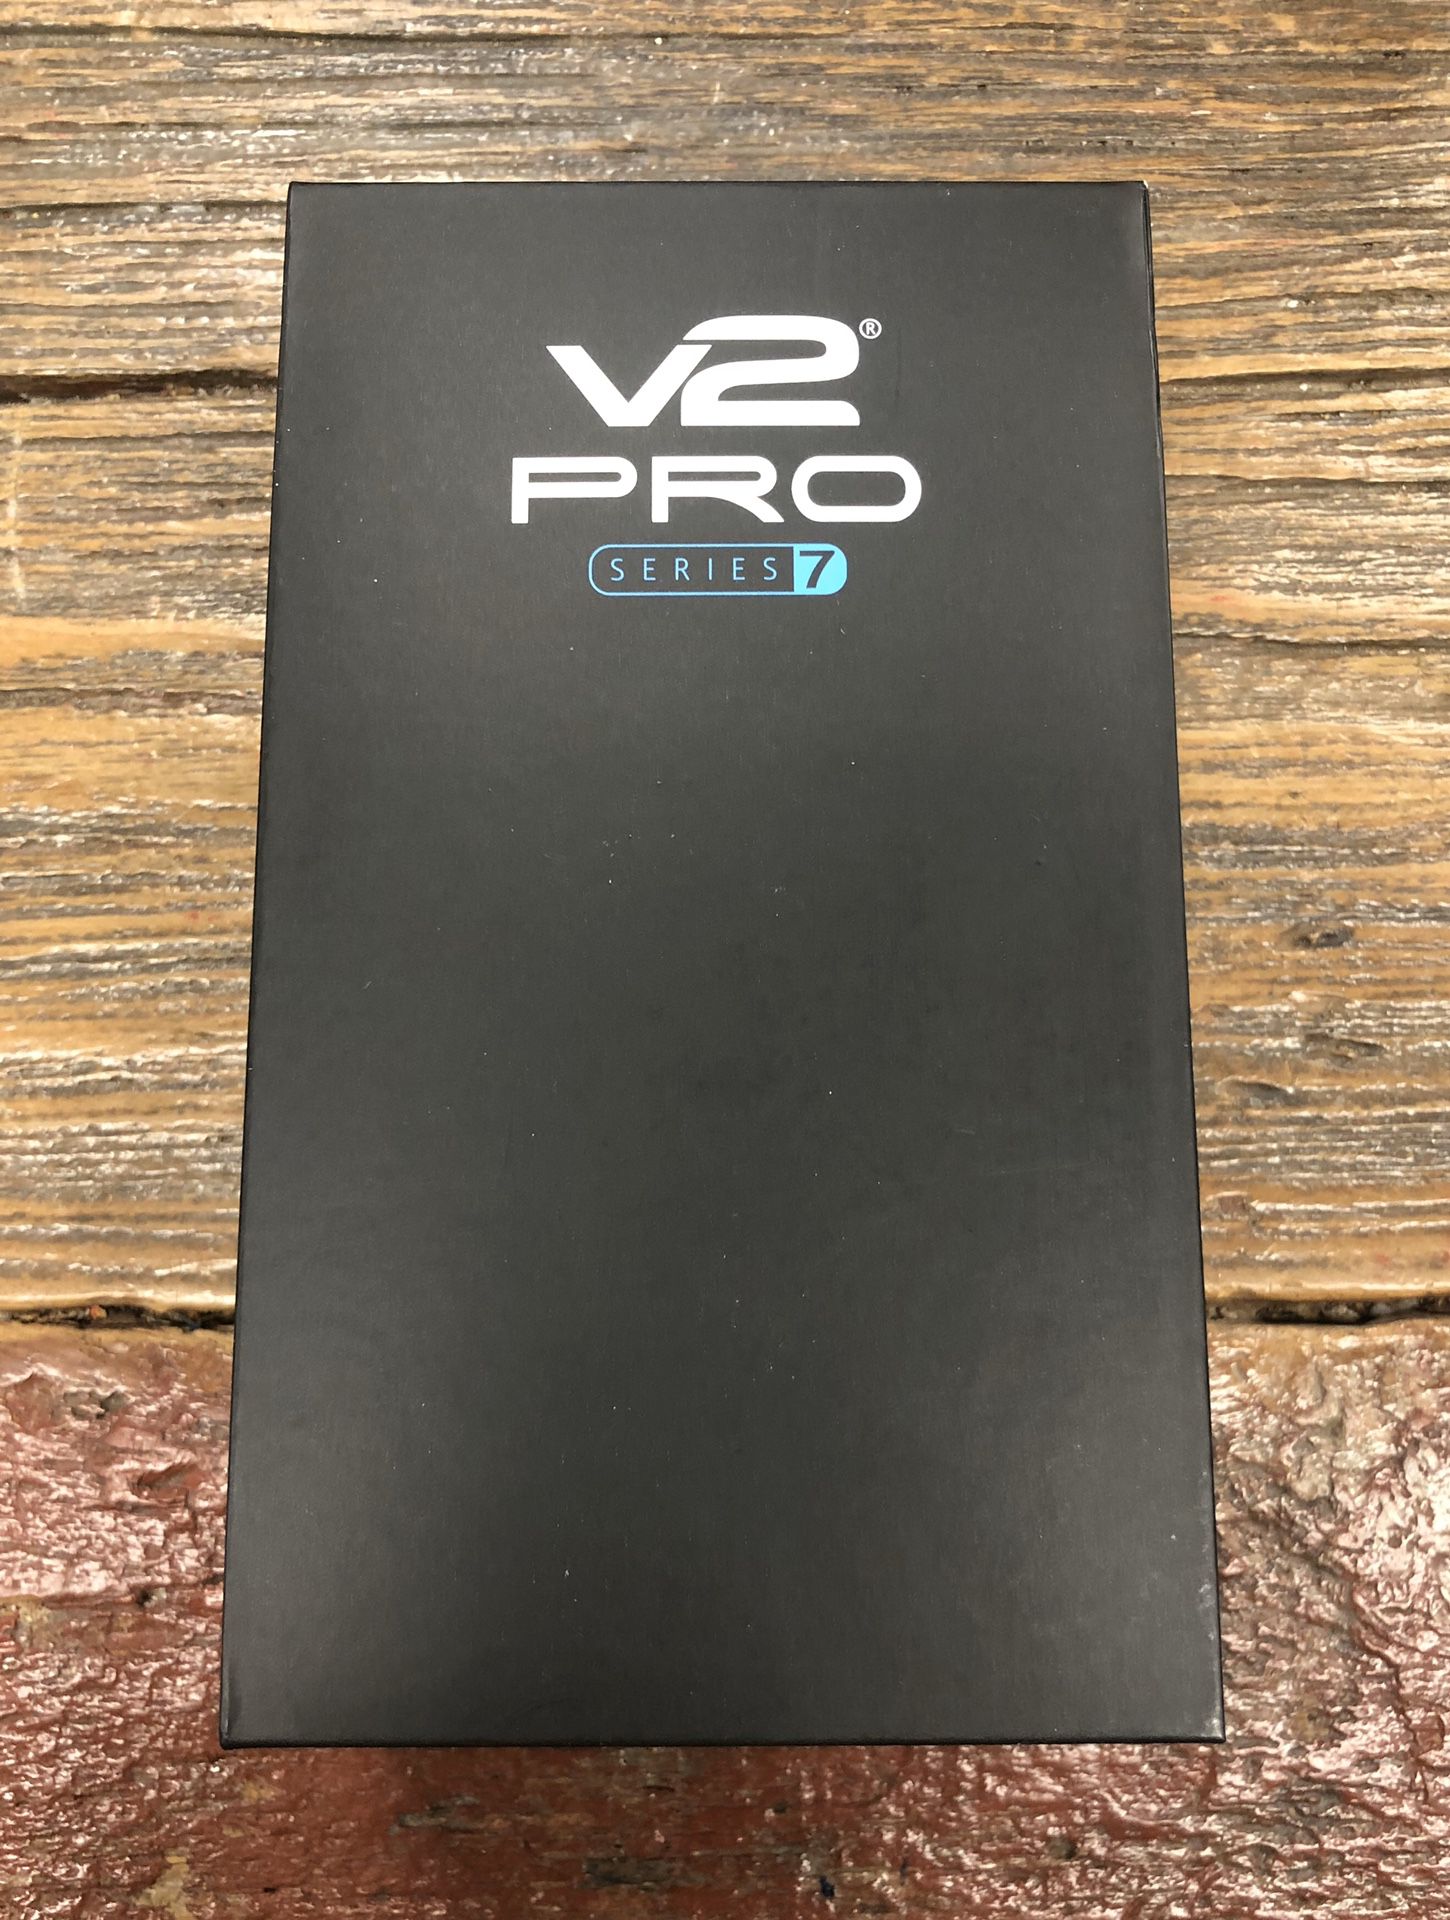 V2 Pro Series 7